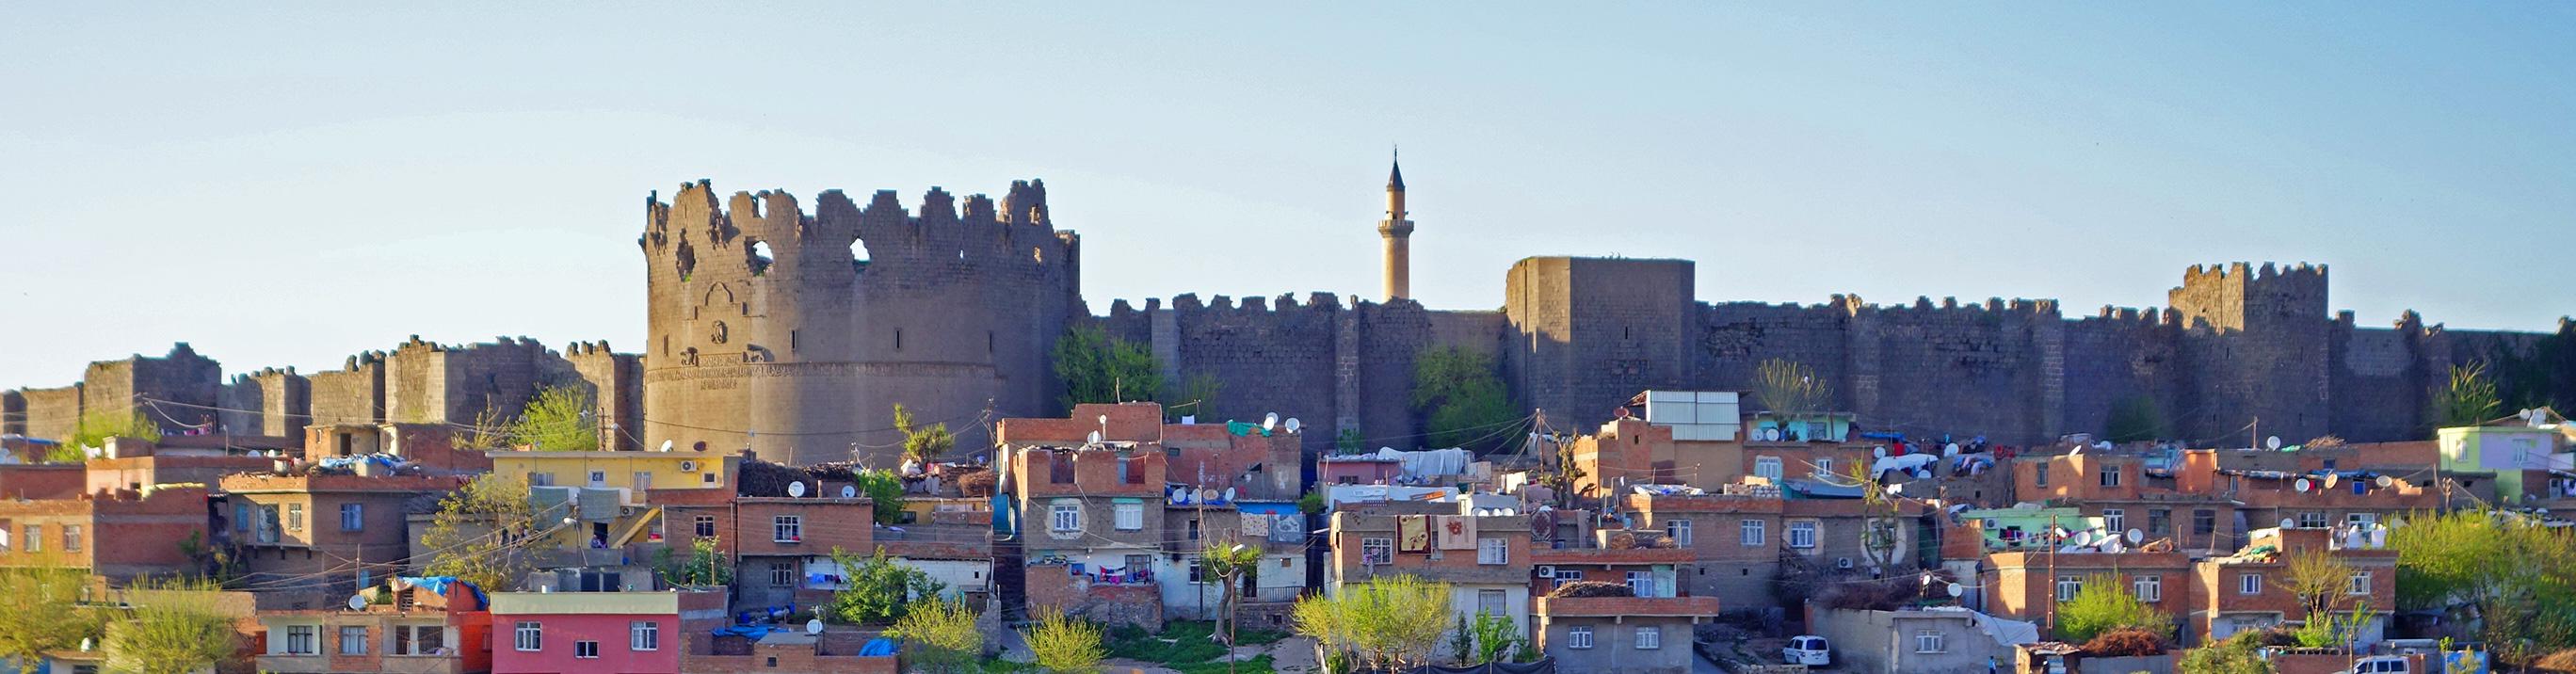 Les remparts historiques de Diyarbakir [Yves Magat]